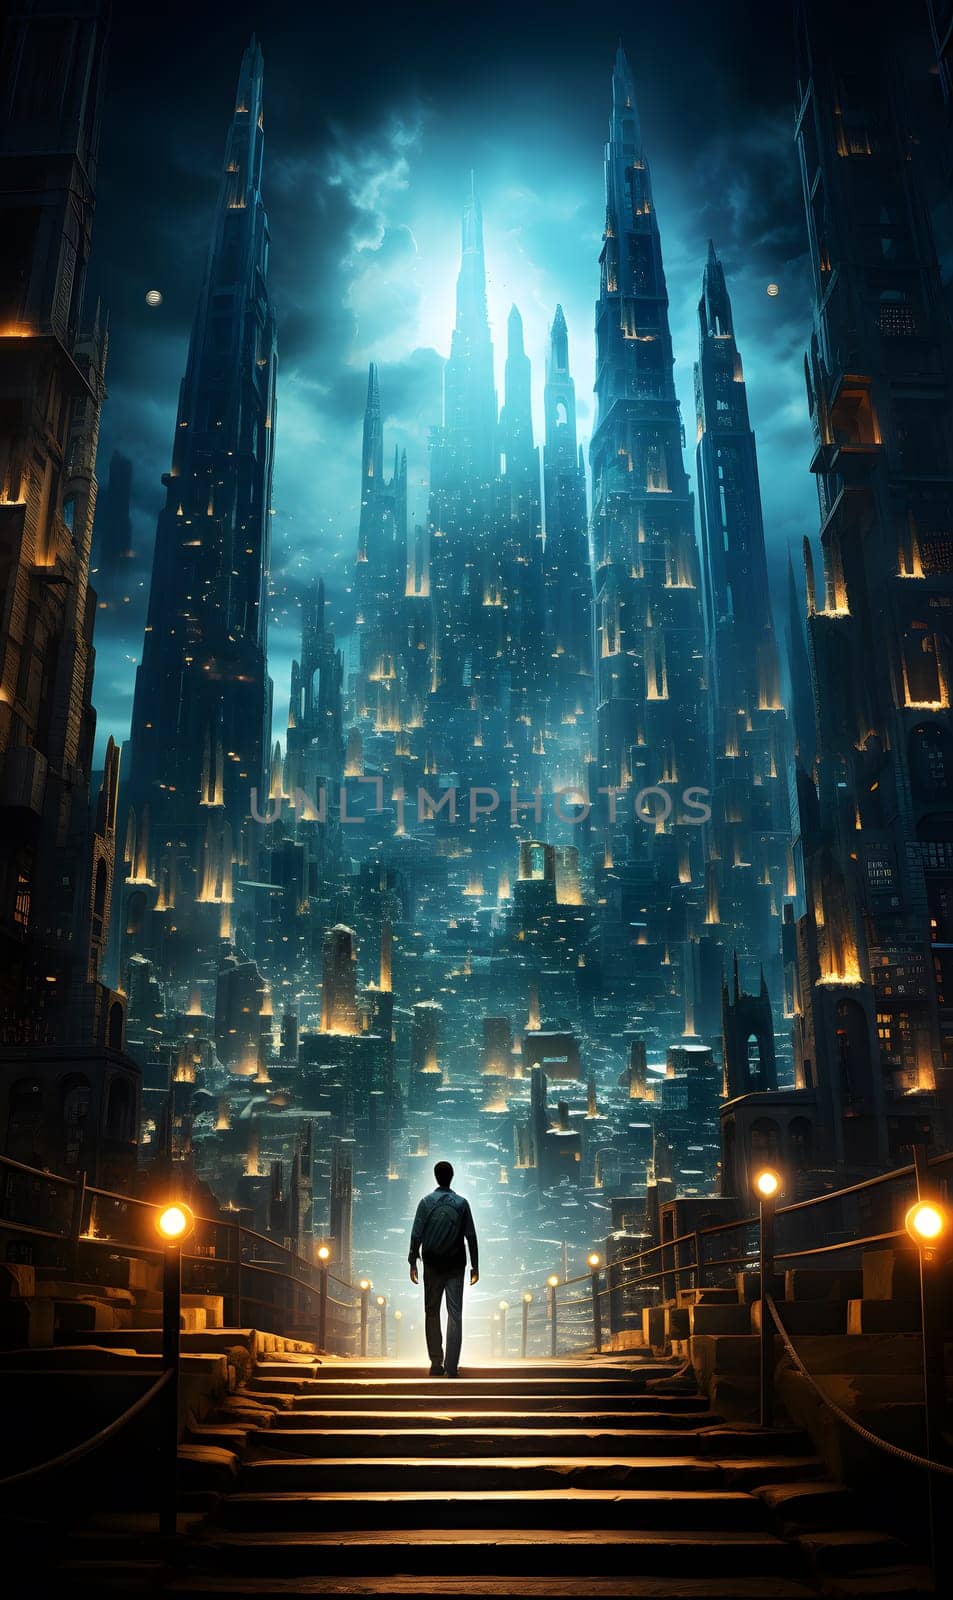 A solitary figure stands before a glowing futuristic metropolis at night - generative AI